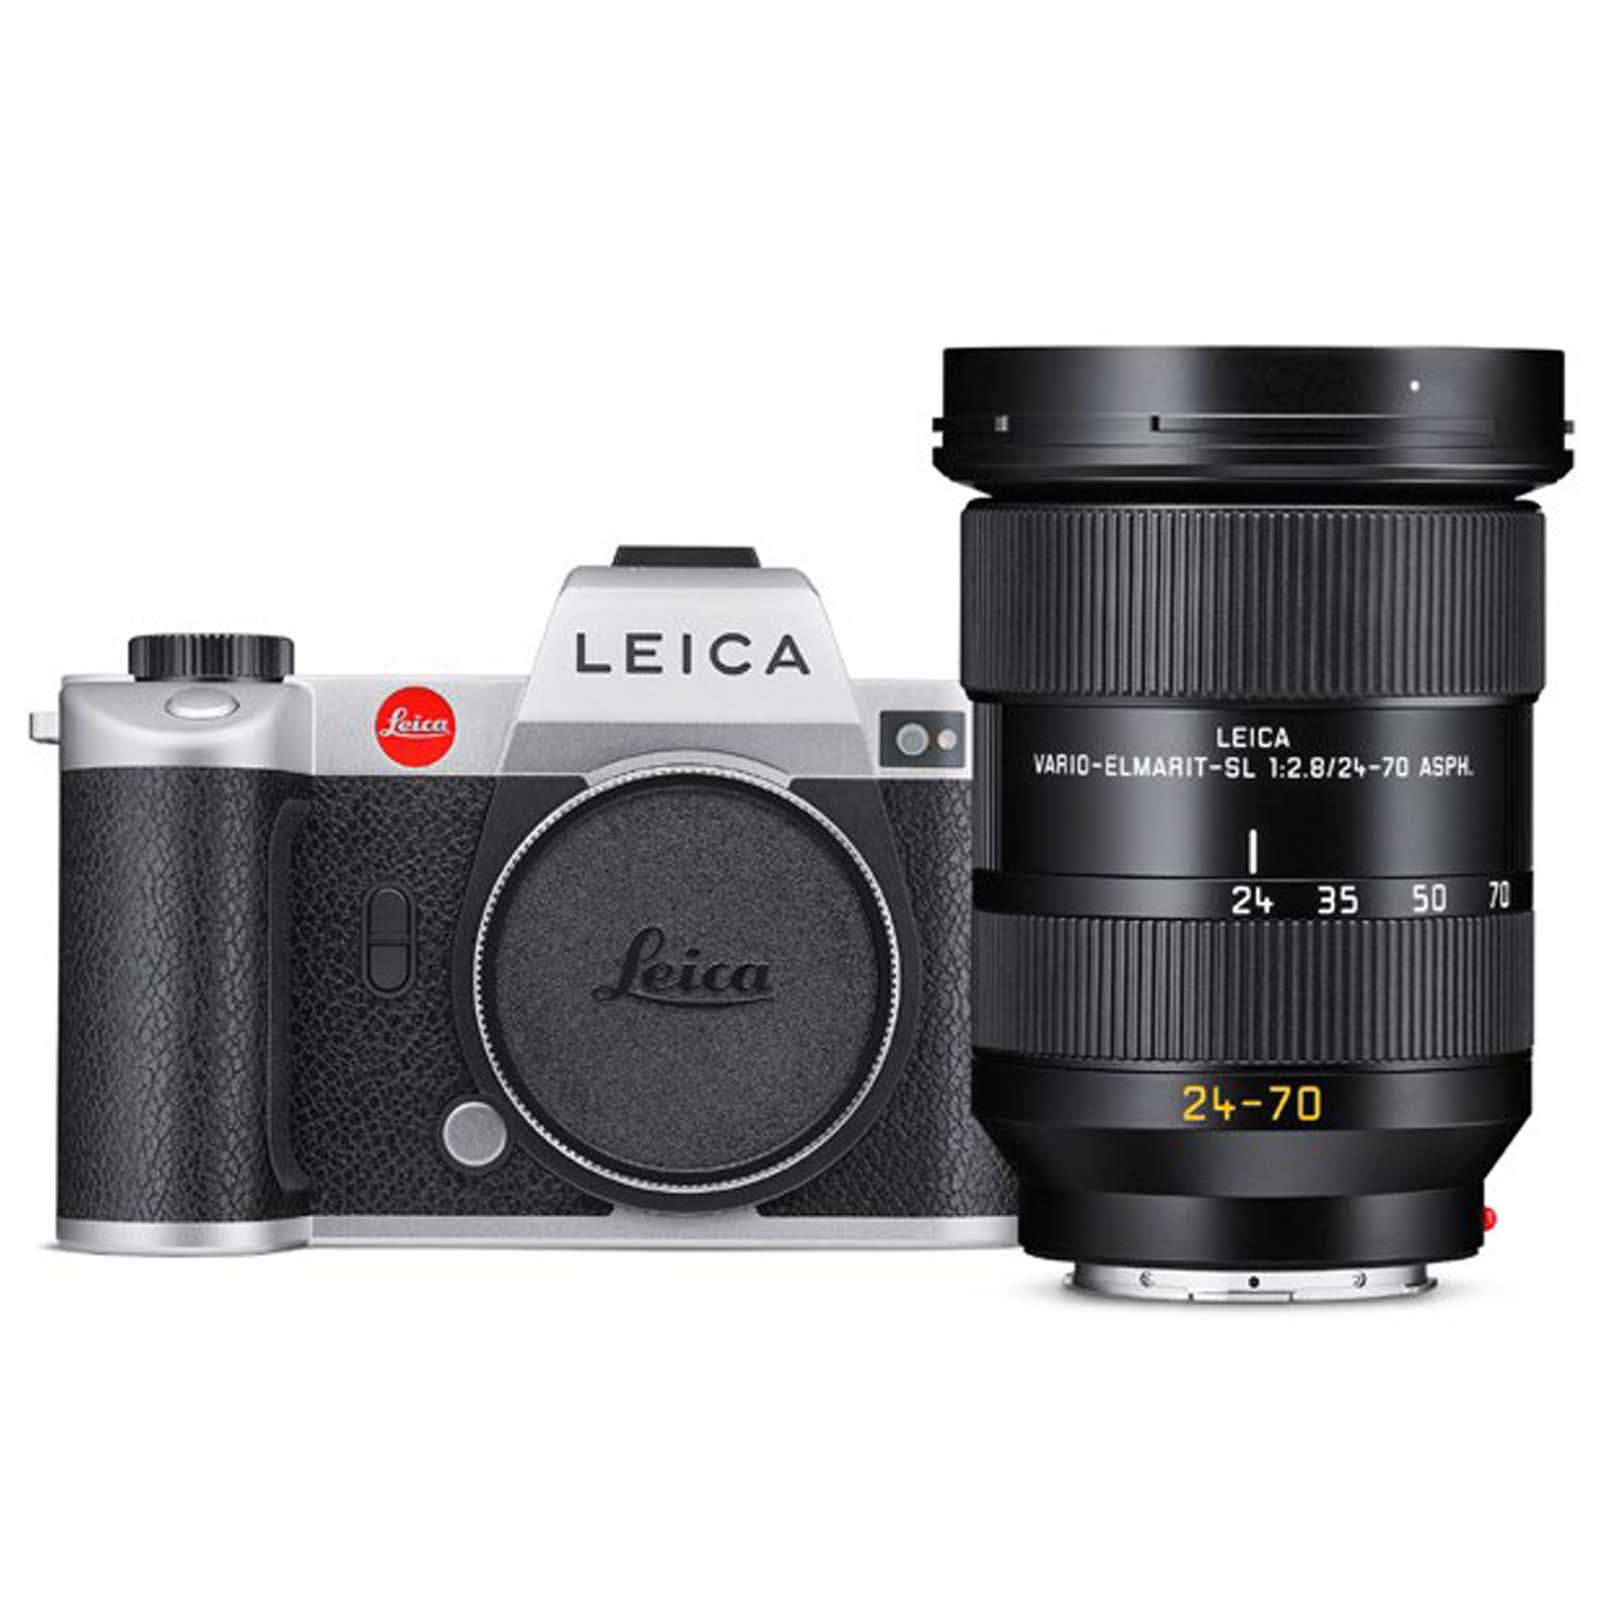 Image of Leica SL2 Digital Camera with 2470mm f28 ASPH VarioElmarSL Lens Silver